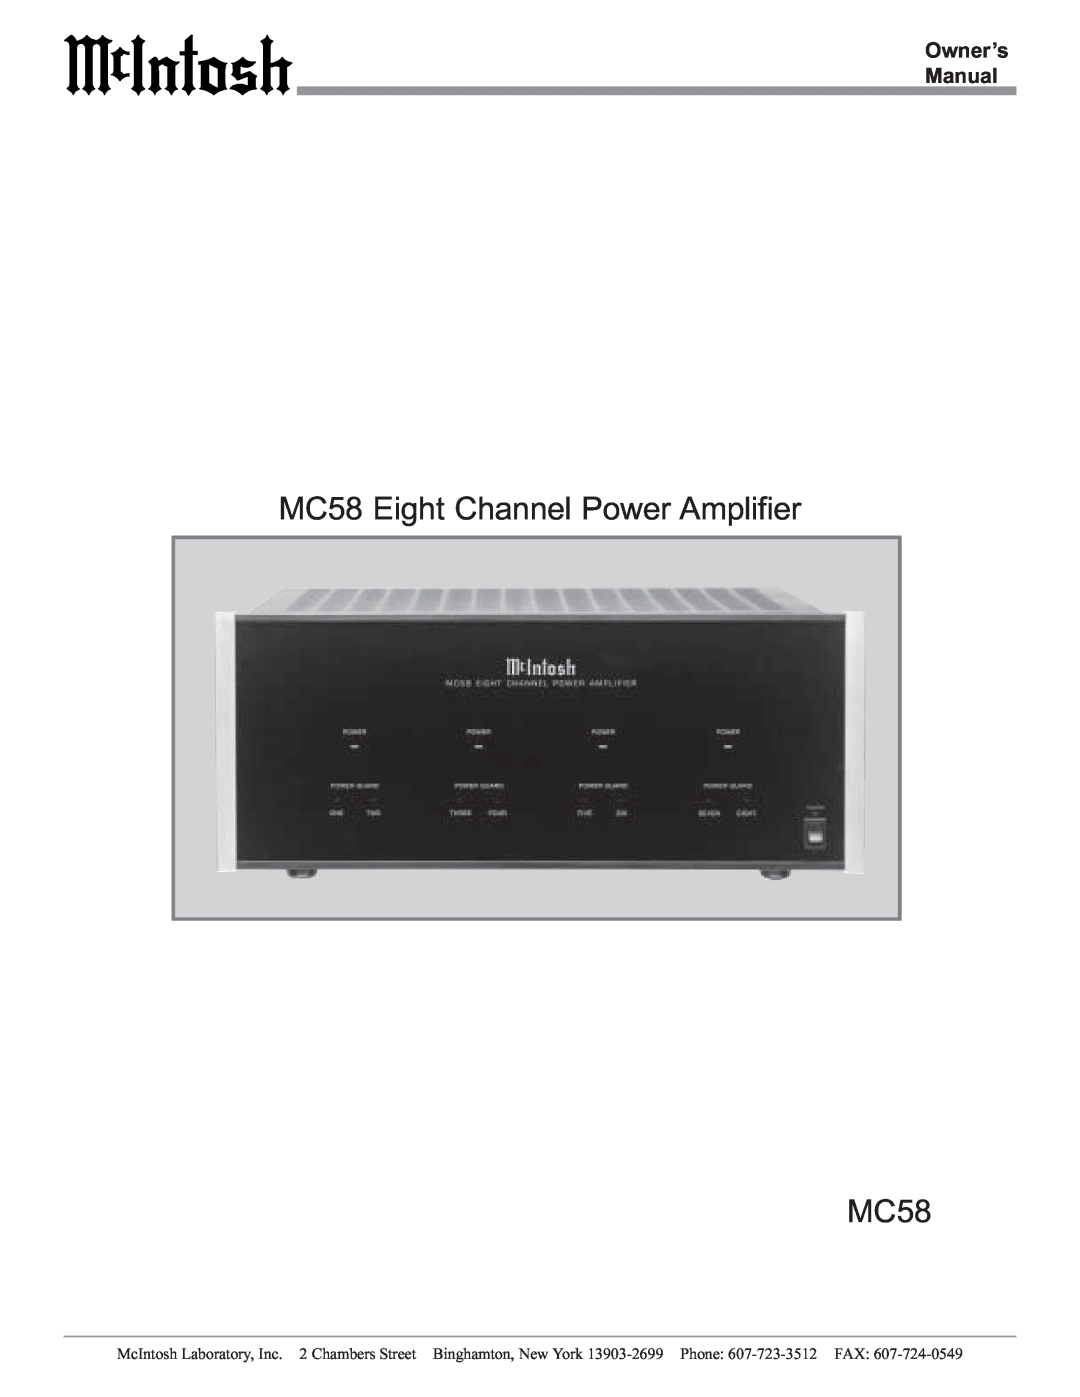 McIntosh owner manual MC58 Eight Channel Power Amplifier MC58 